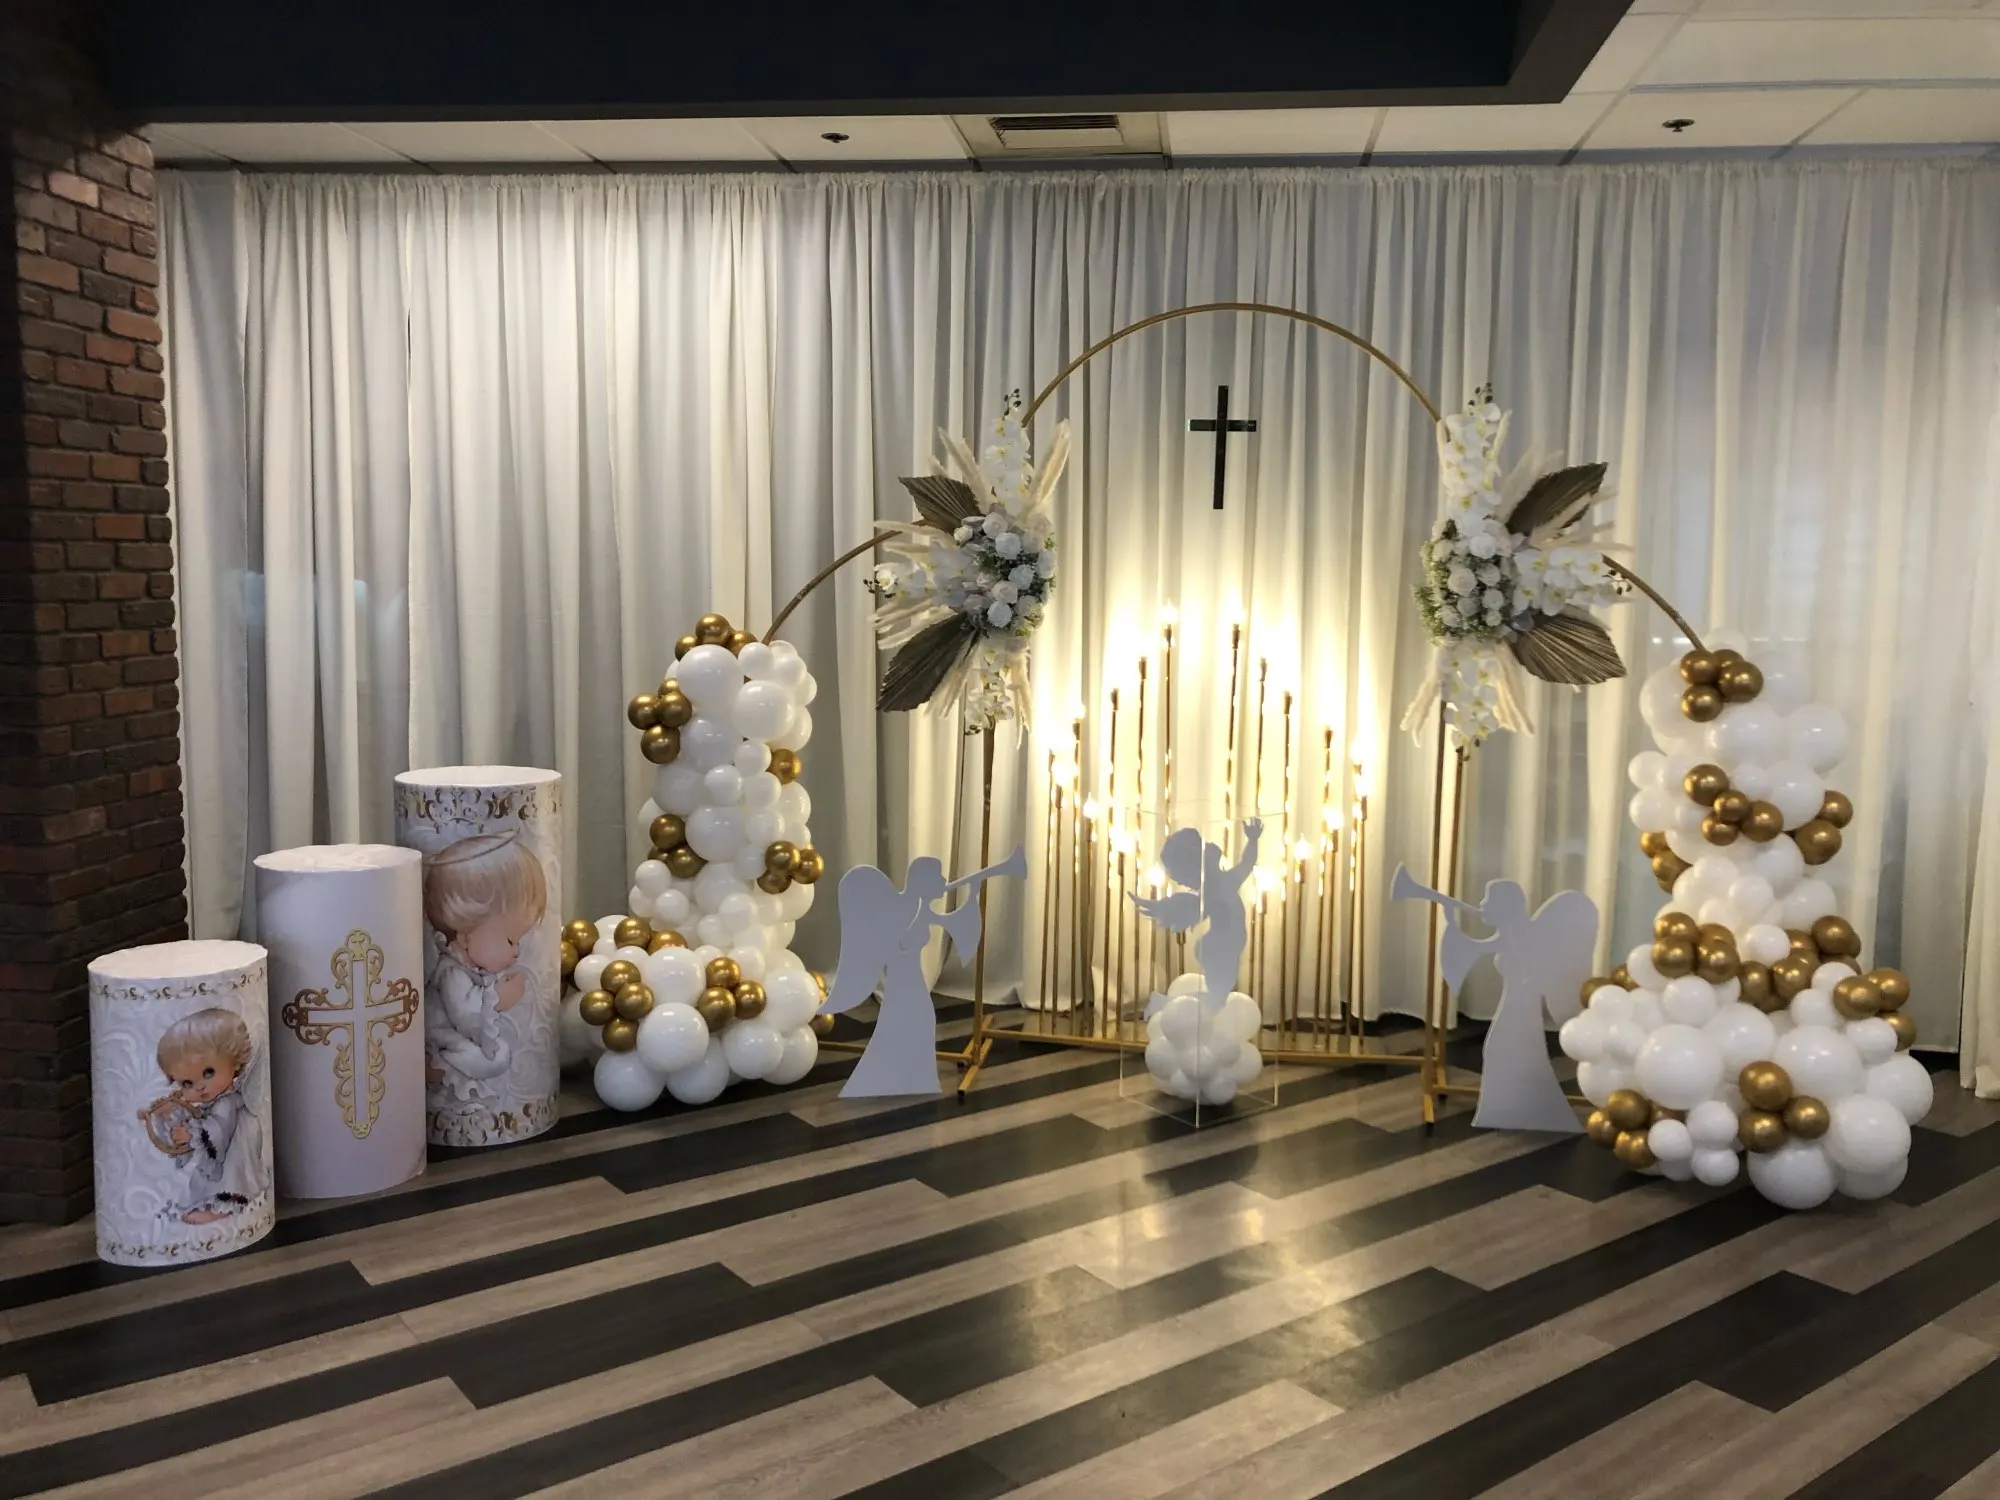 Hot Selling 3Pcs Set Arch Aluminium Flower Frame iron Wedding Backdrop for wedding party decoration backdrop